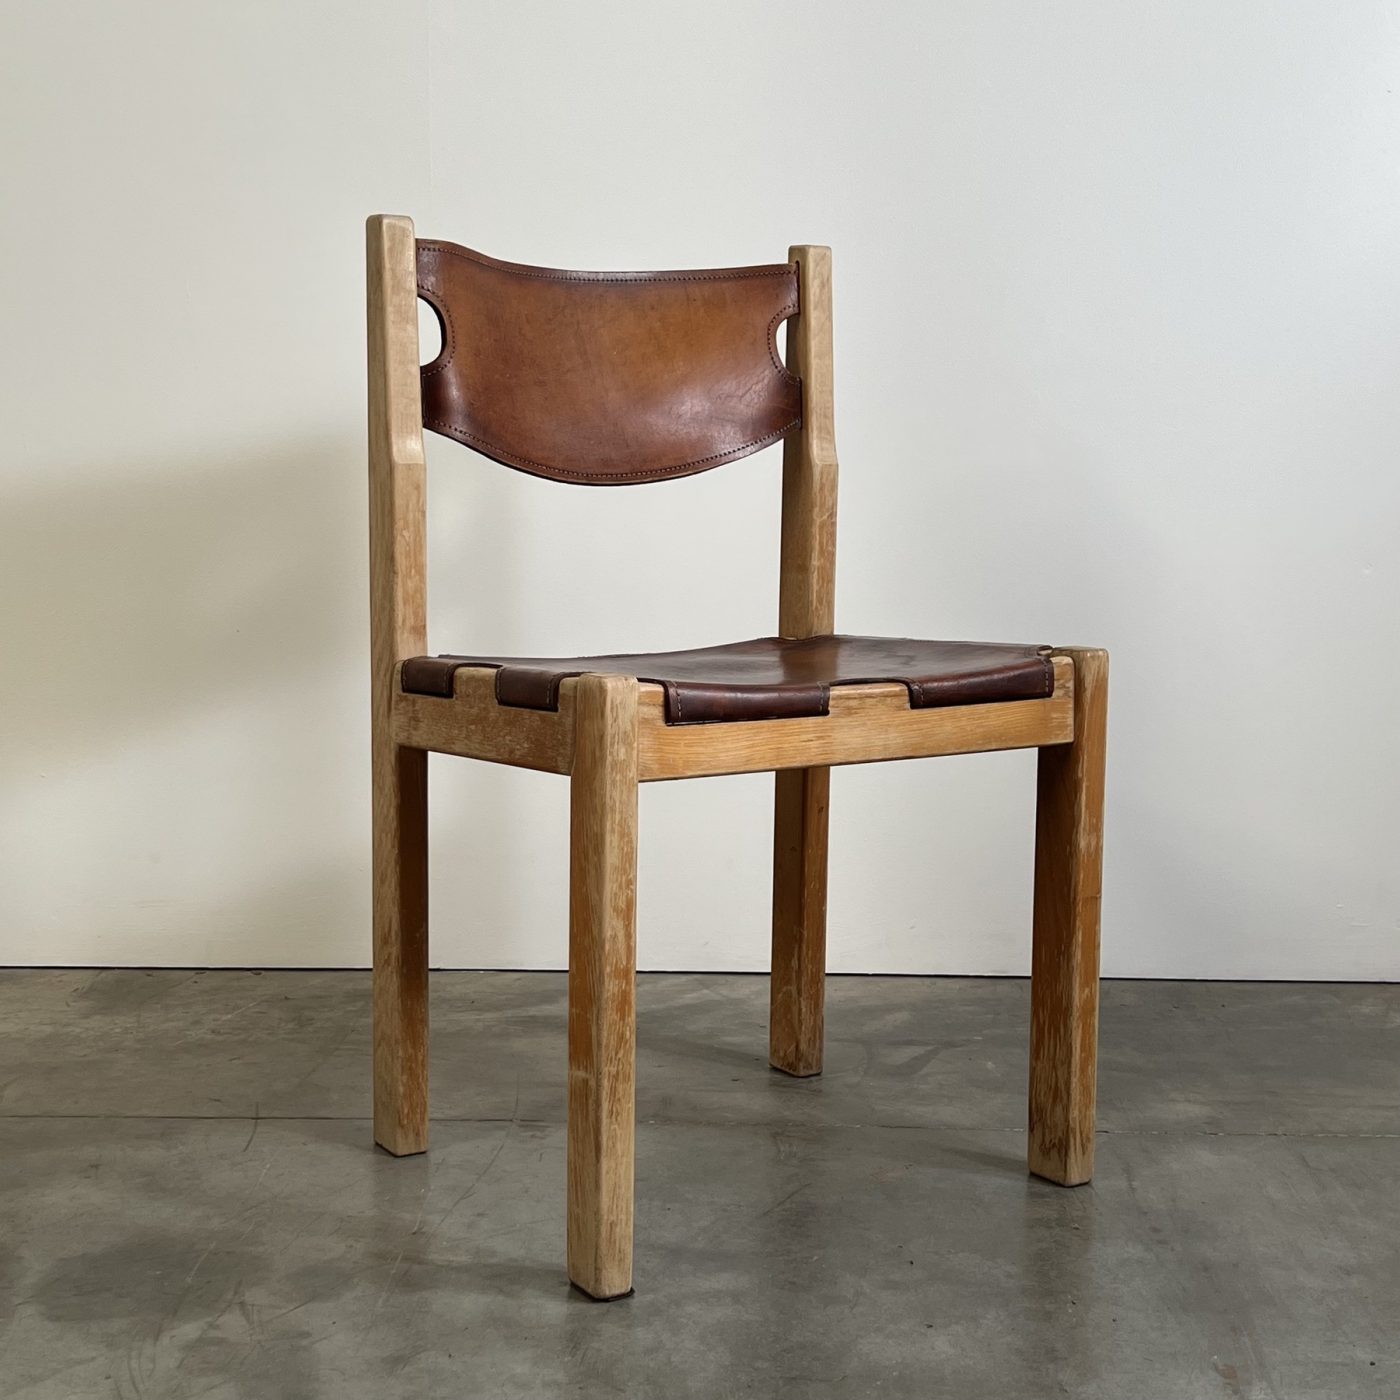 objet-vagabond-leather-chairs0010